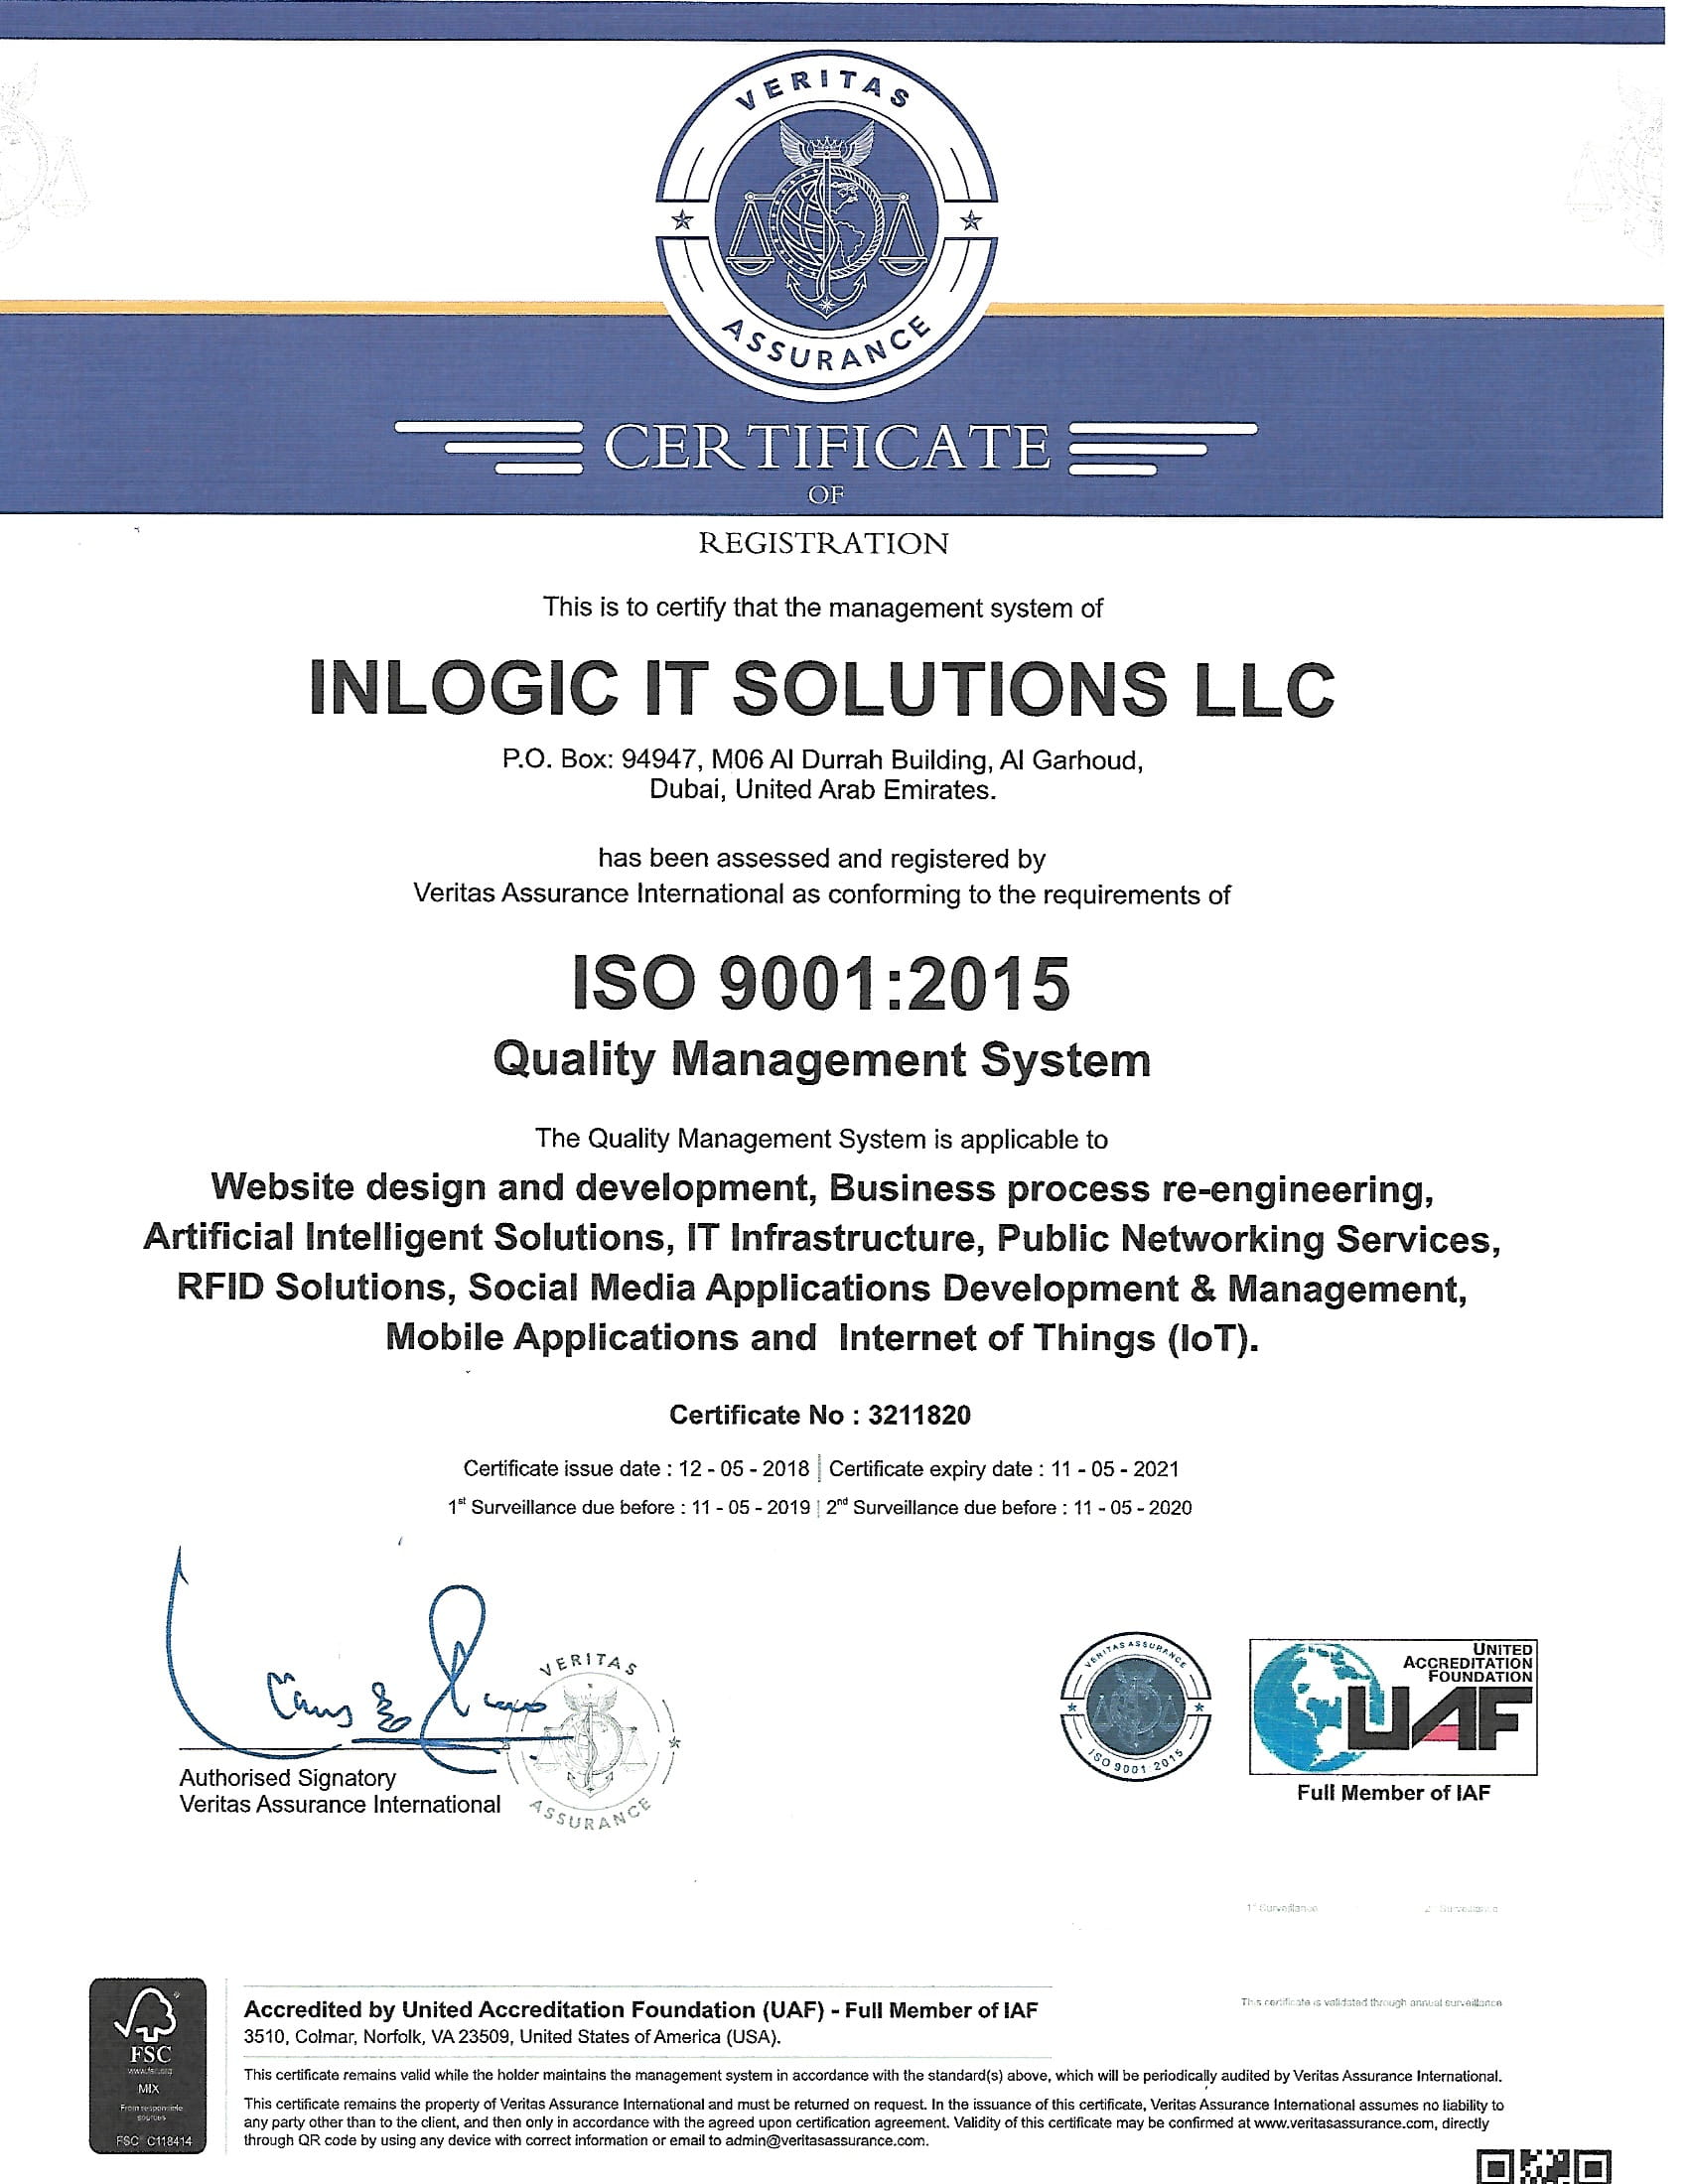 ISO90012015Certificate-inlogic